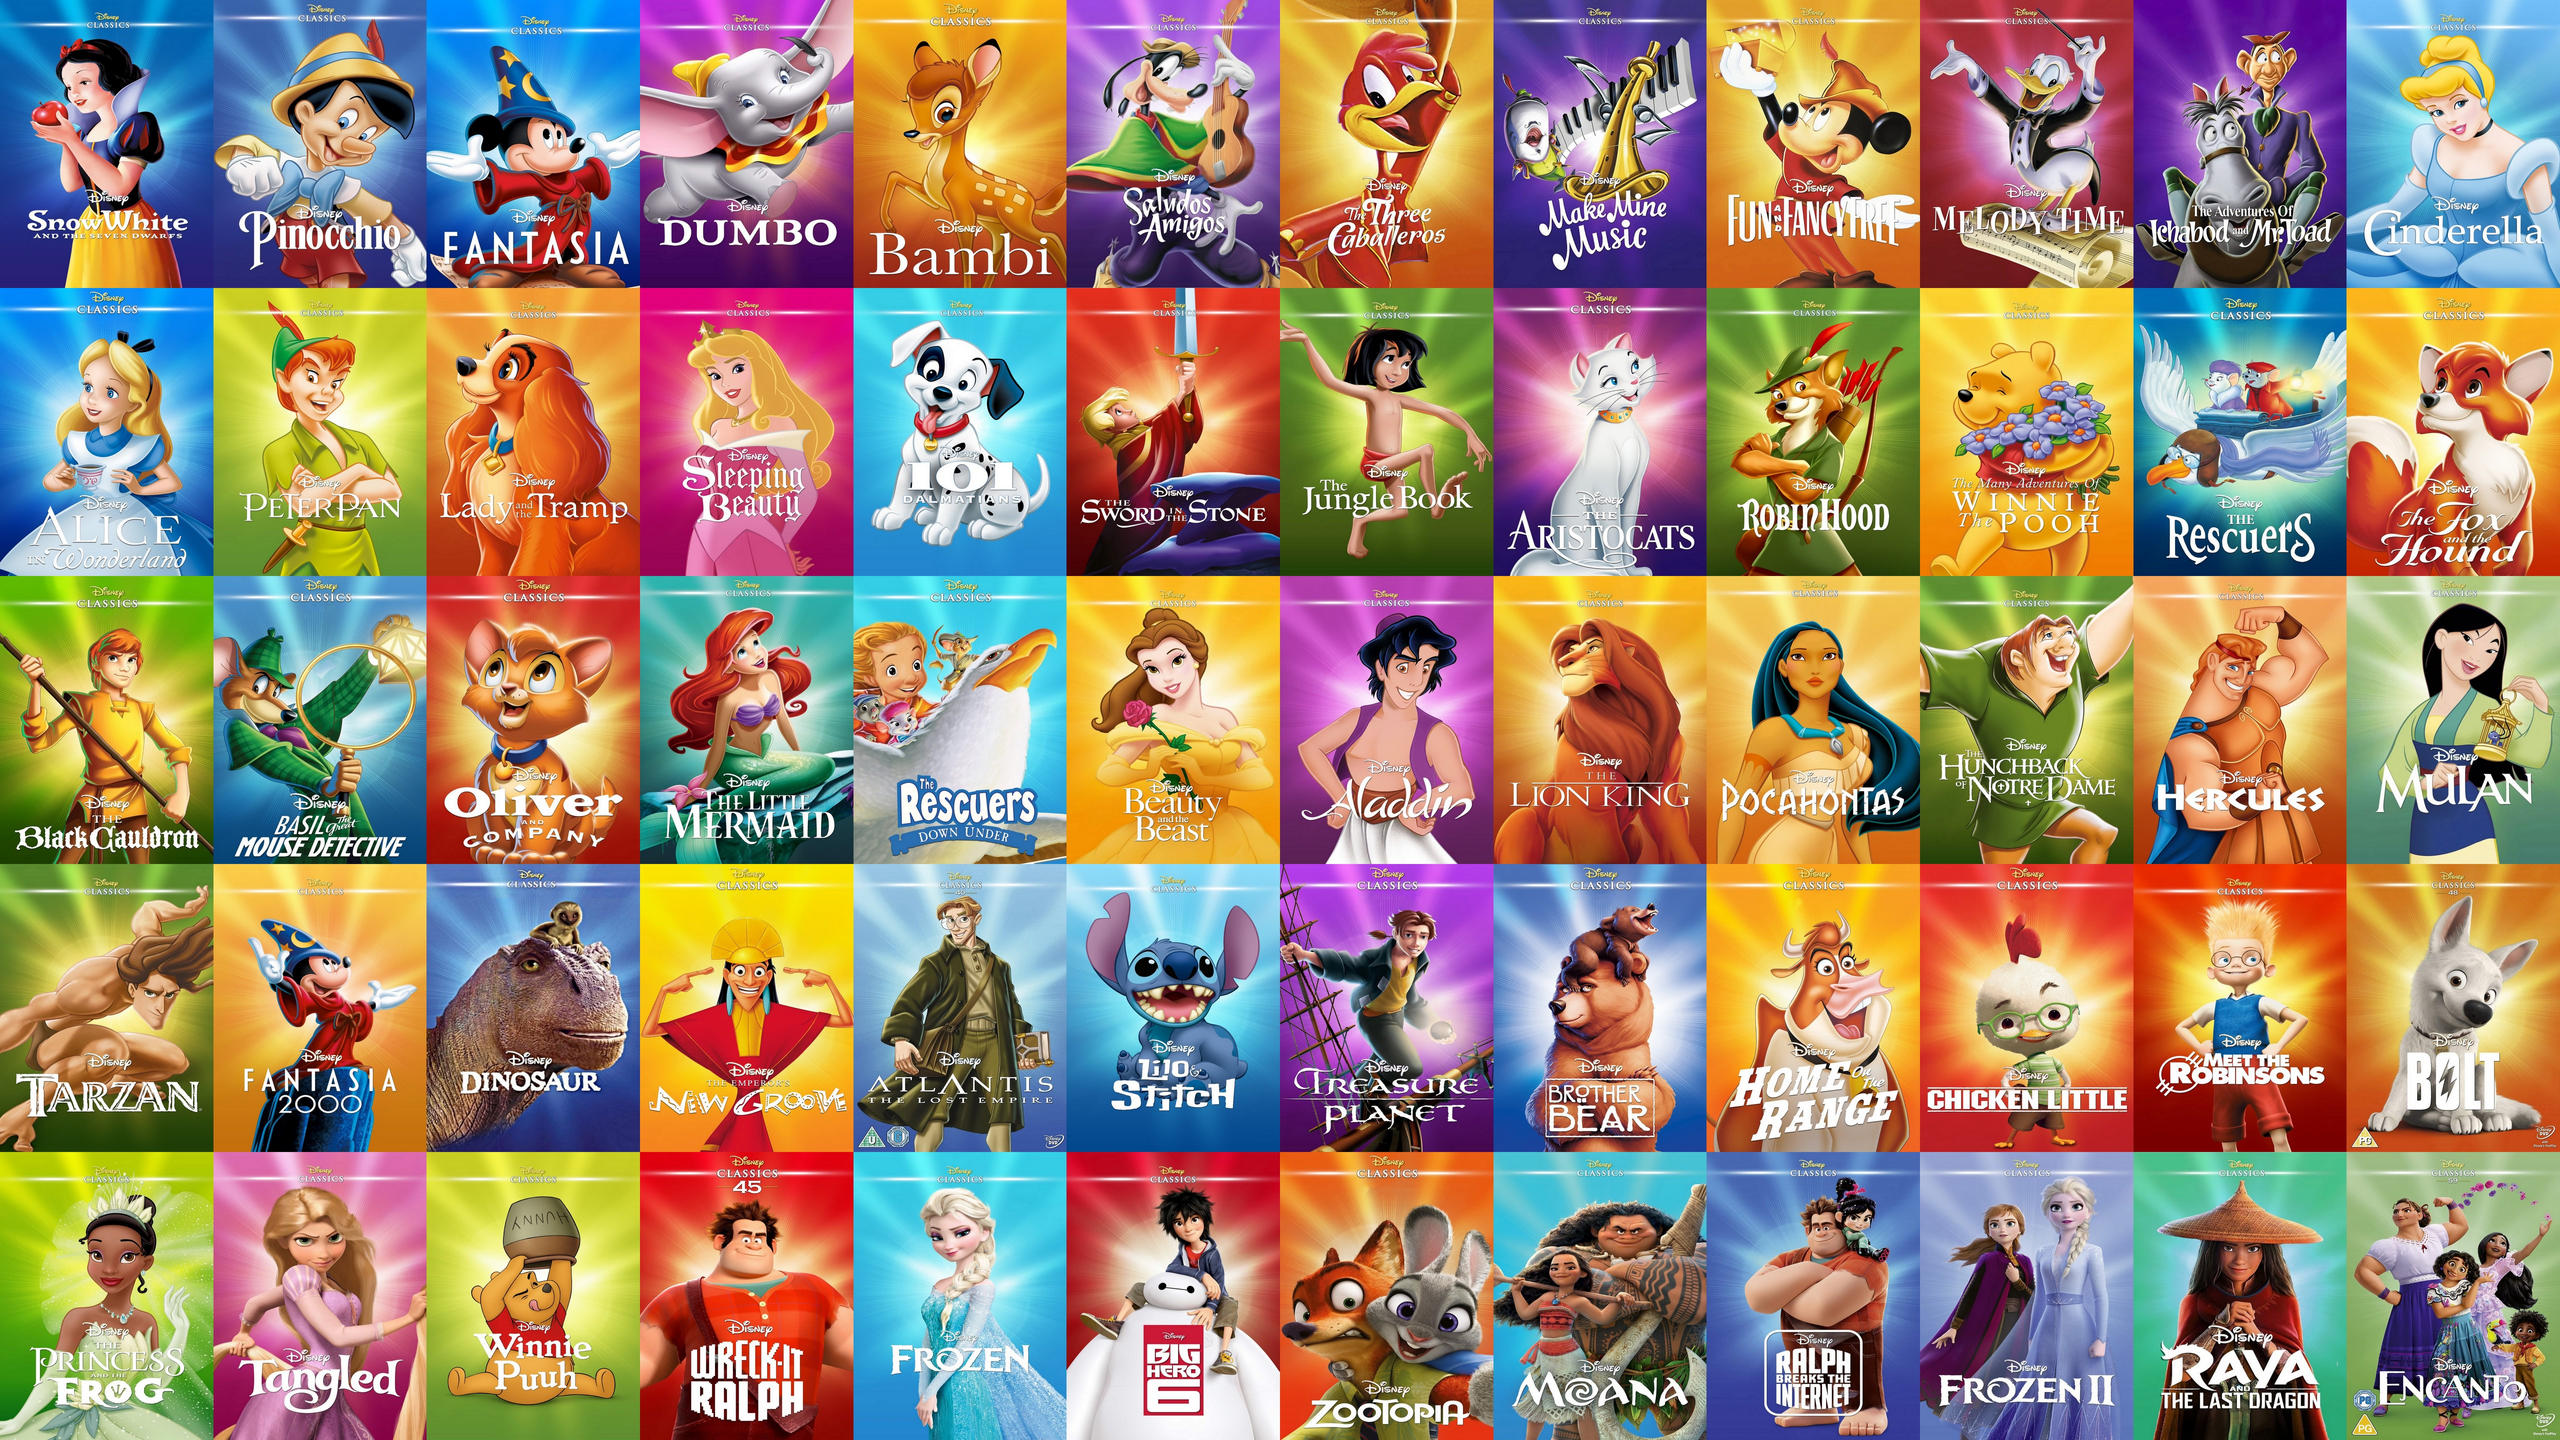 Disney animated classic movies collage by polskienagrania1990 on DeviantArt